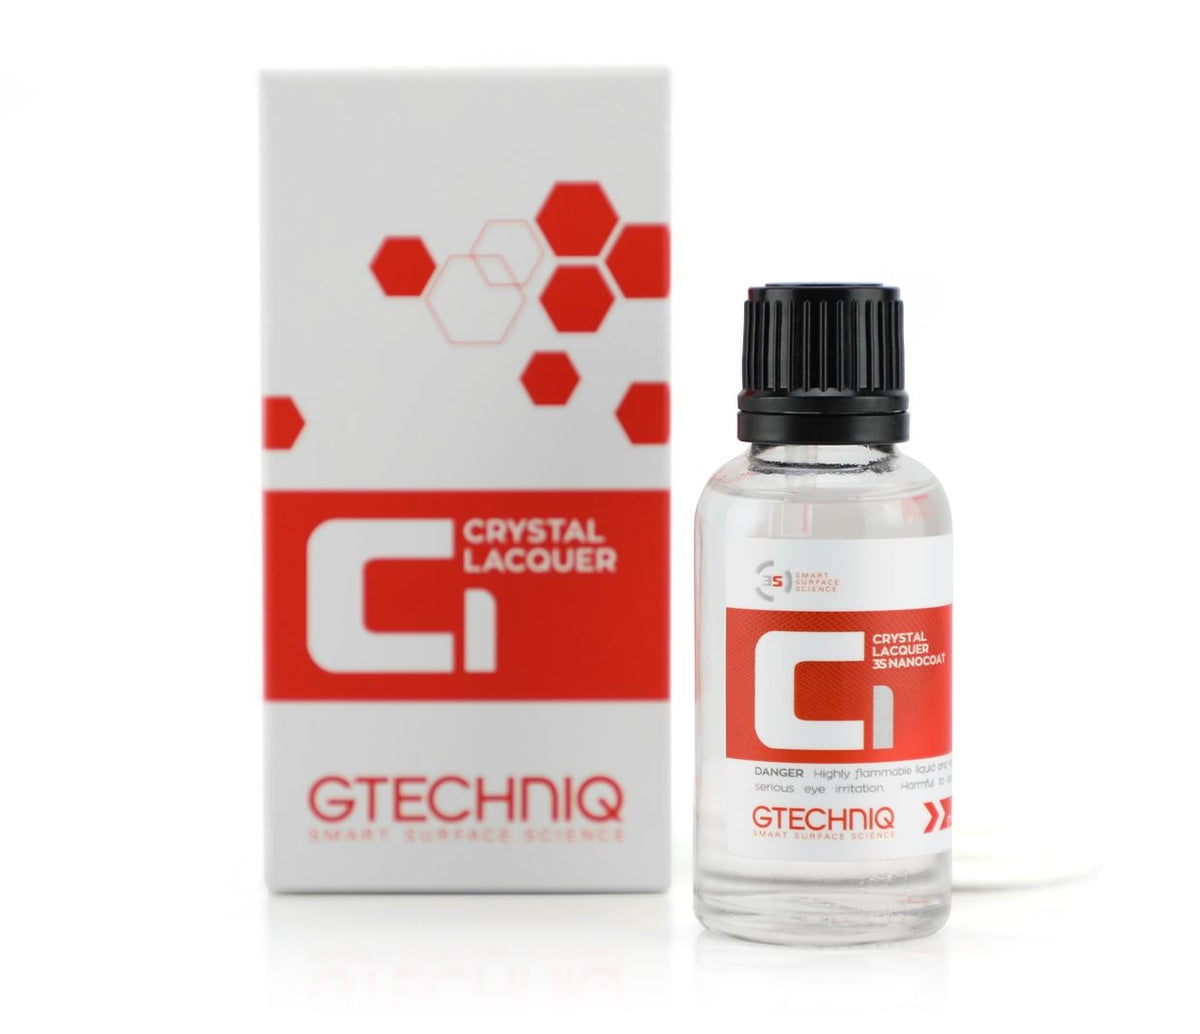 Gtechniq C1 Crystal Lacquer 250ml, Ceramic Paint Coating